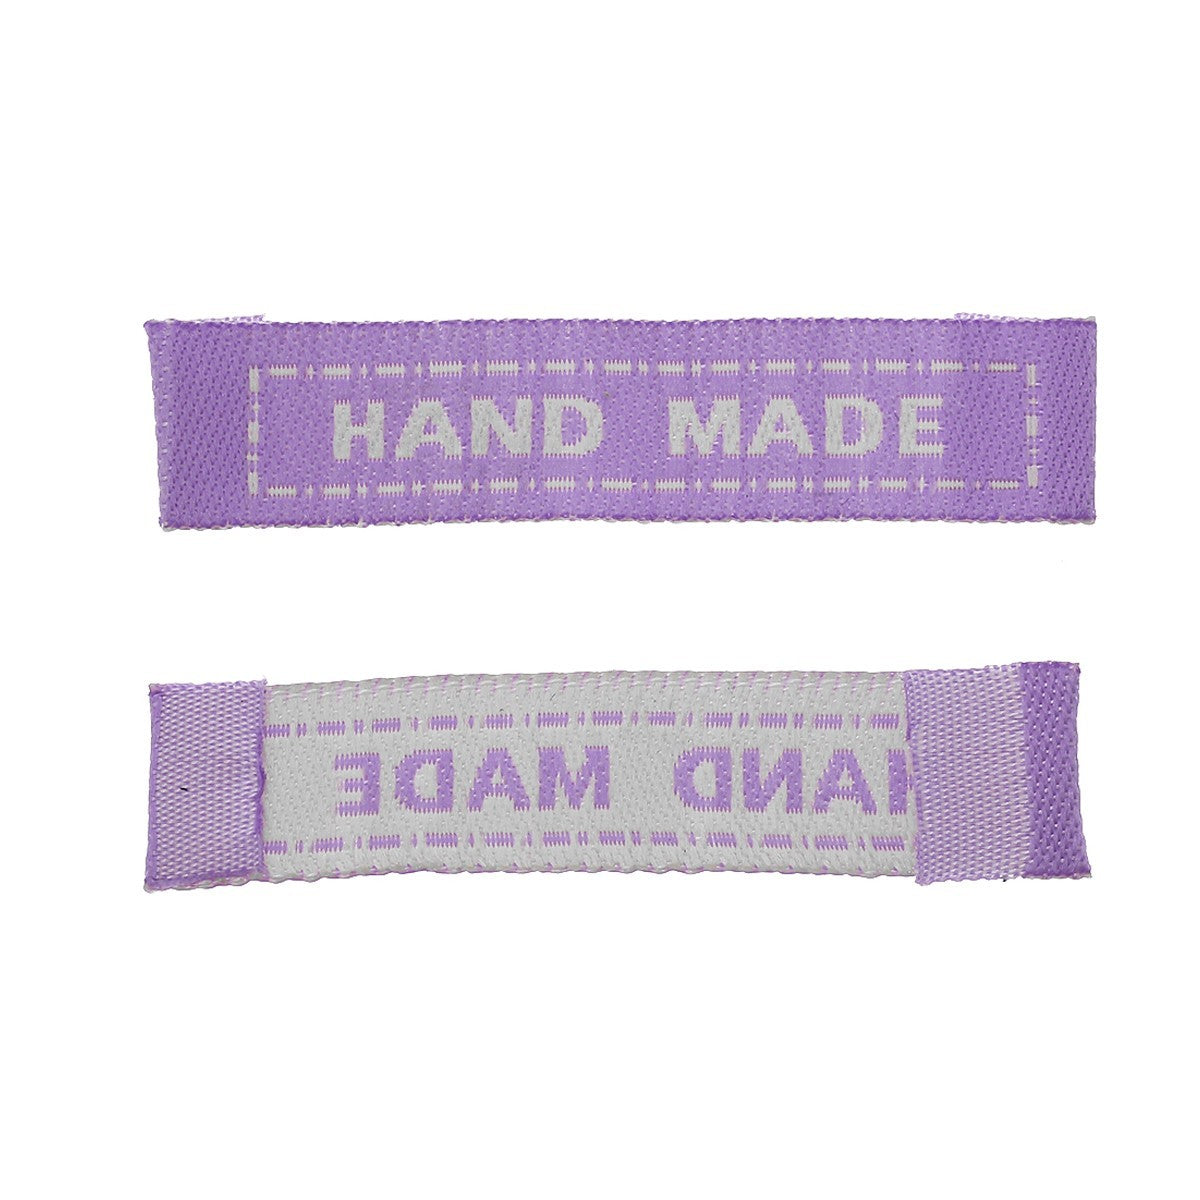 Labels Purple "HAND MADE" 45mm x 10mm (10pcs)